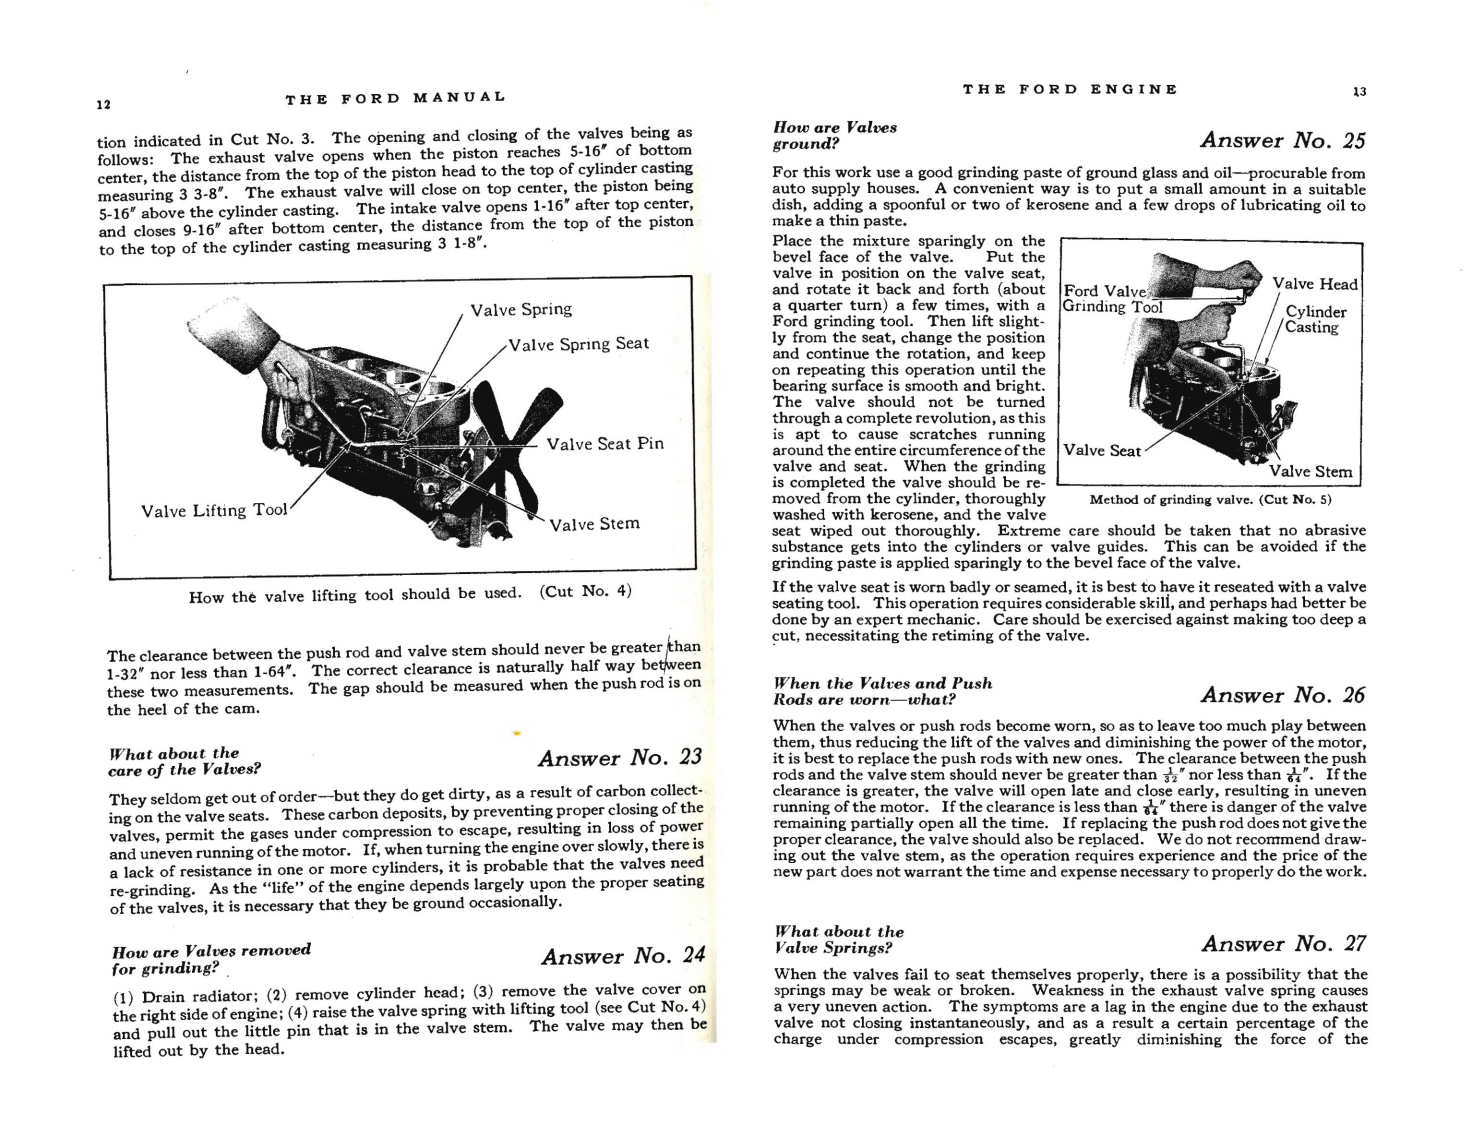 n_1924 Ford Owners Manual-12-13.jpg